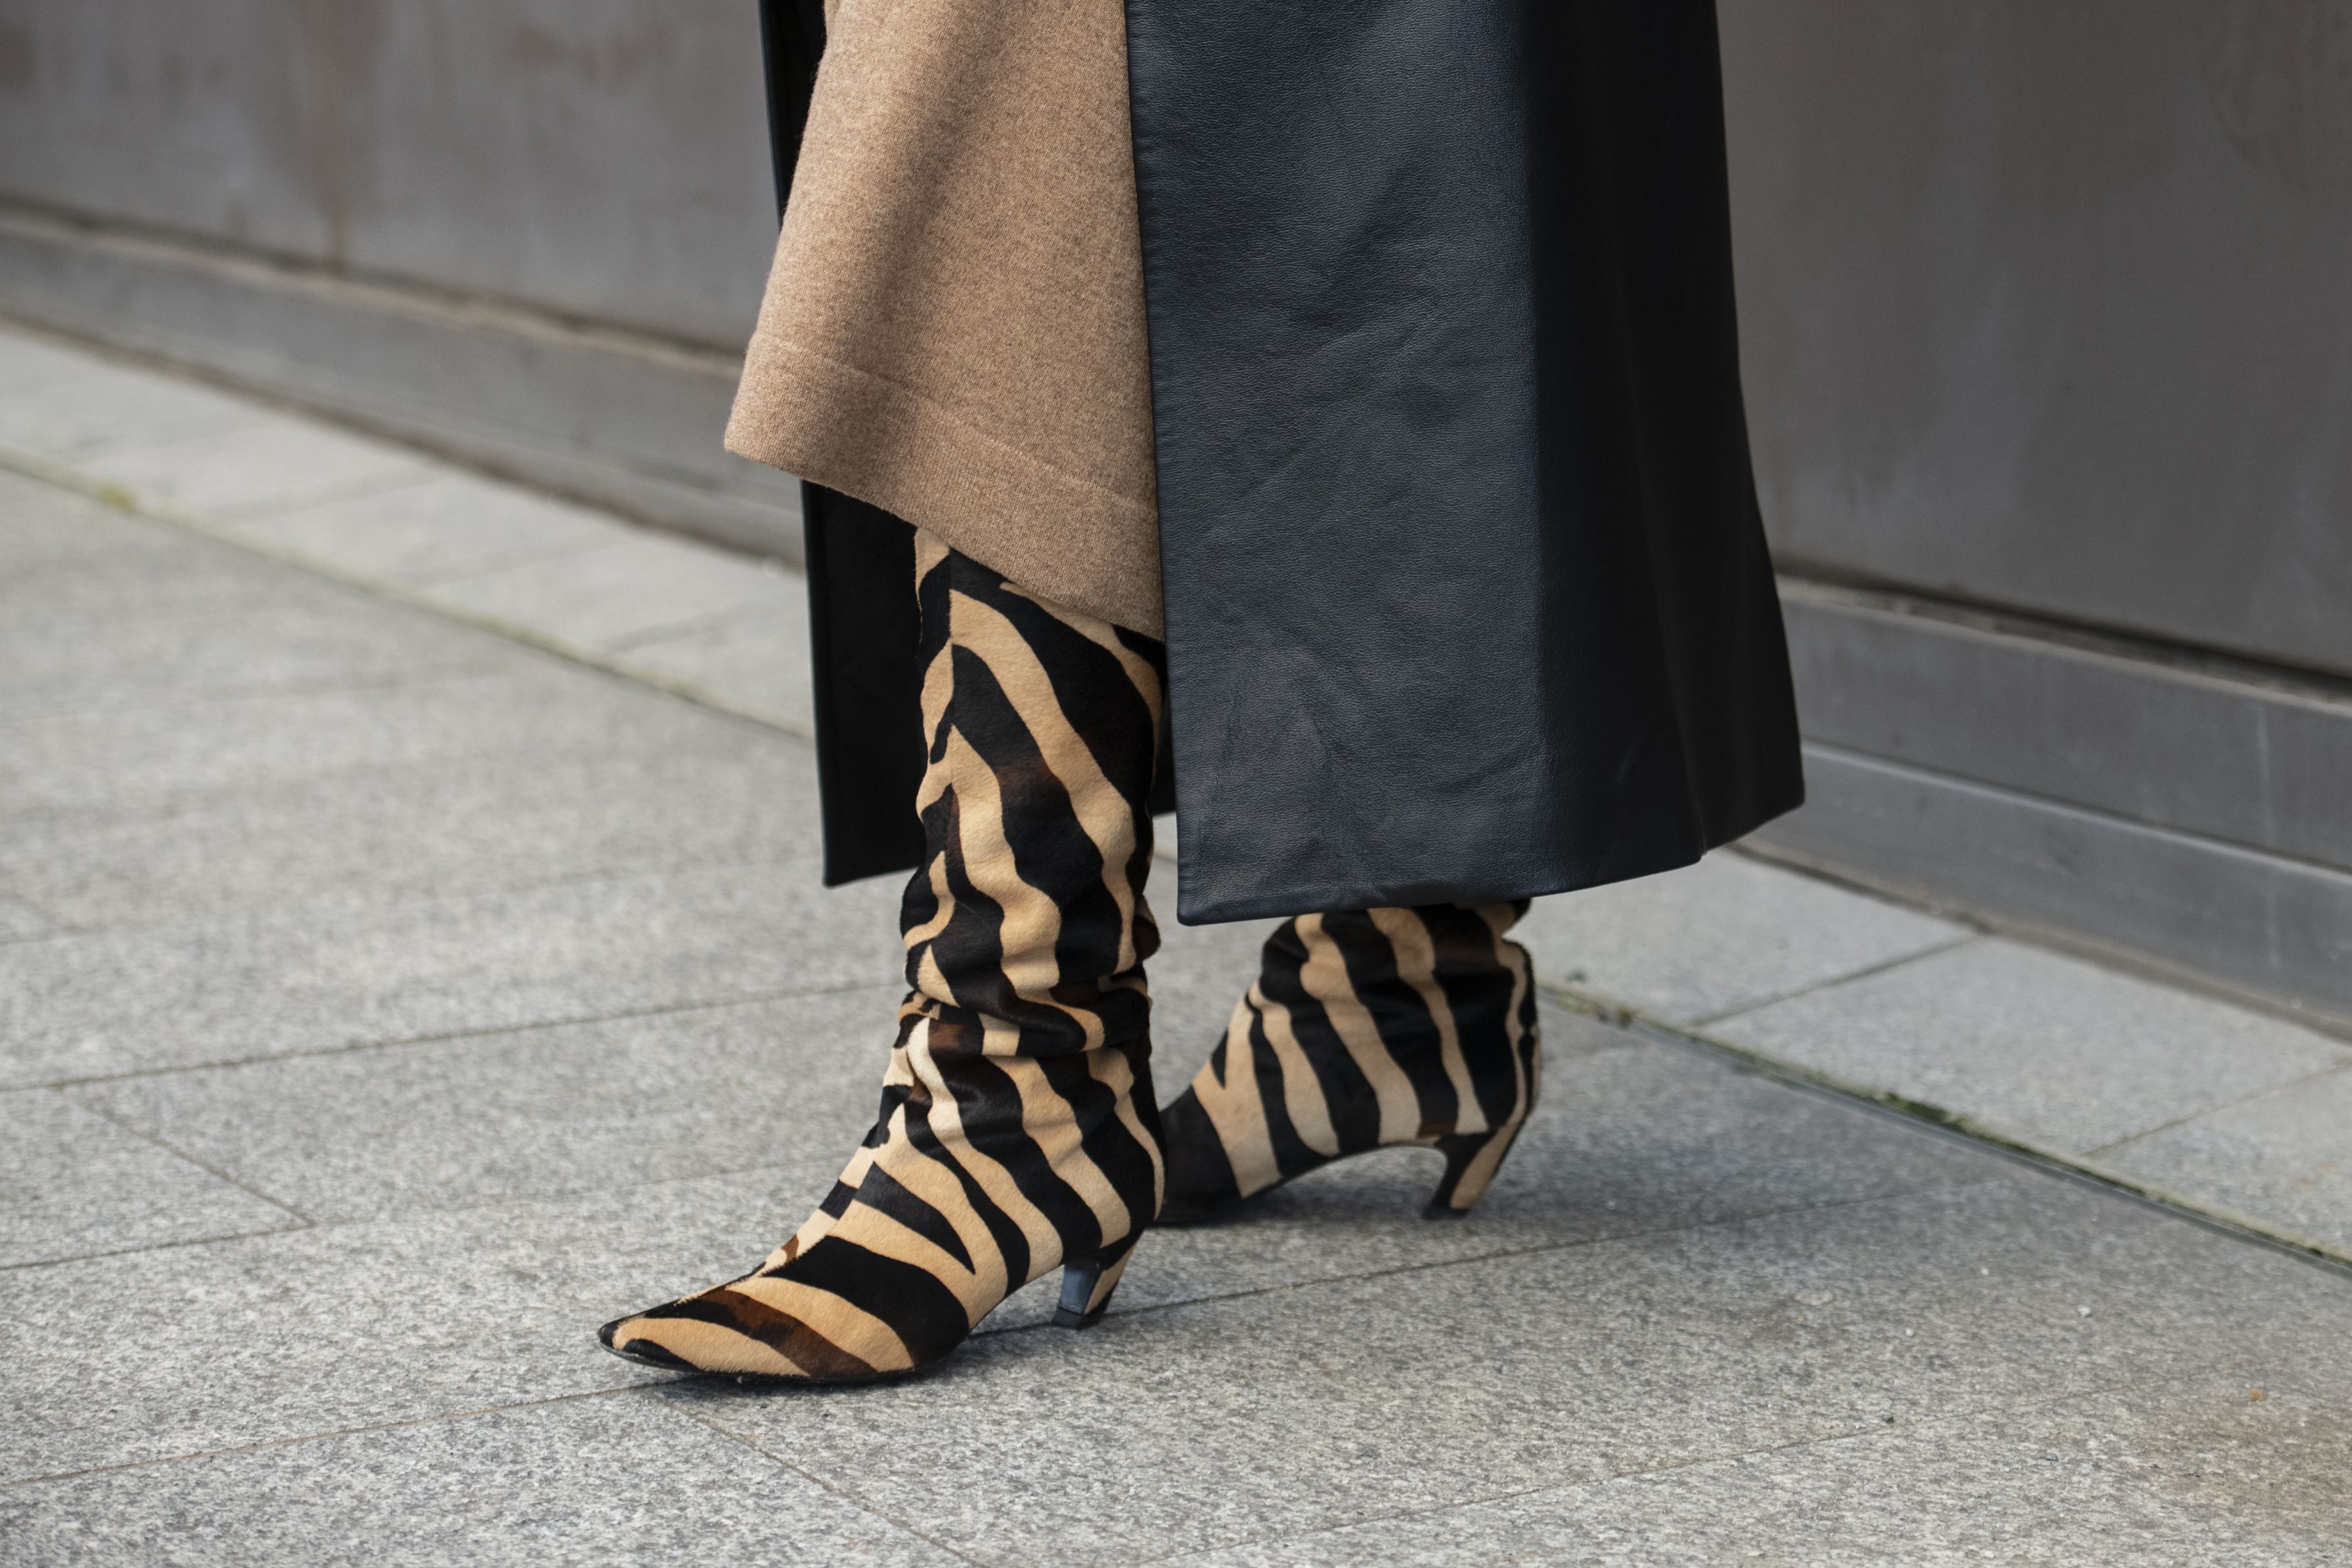 womens tall dress boots low heel